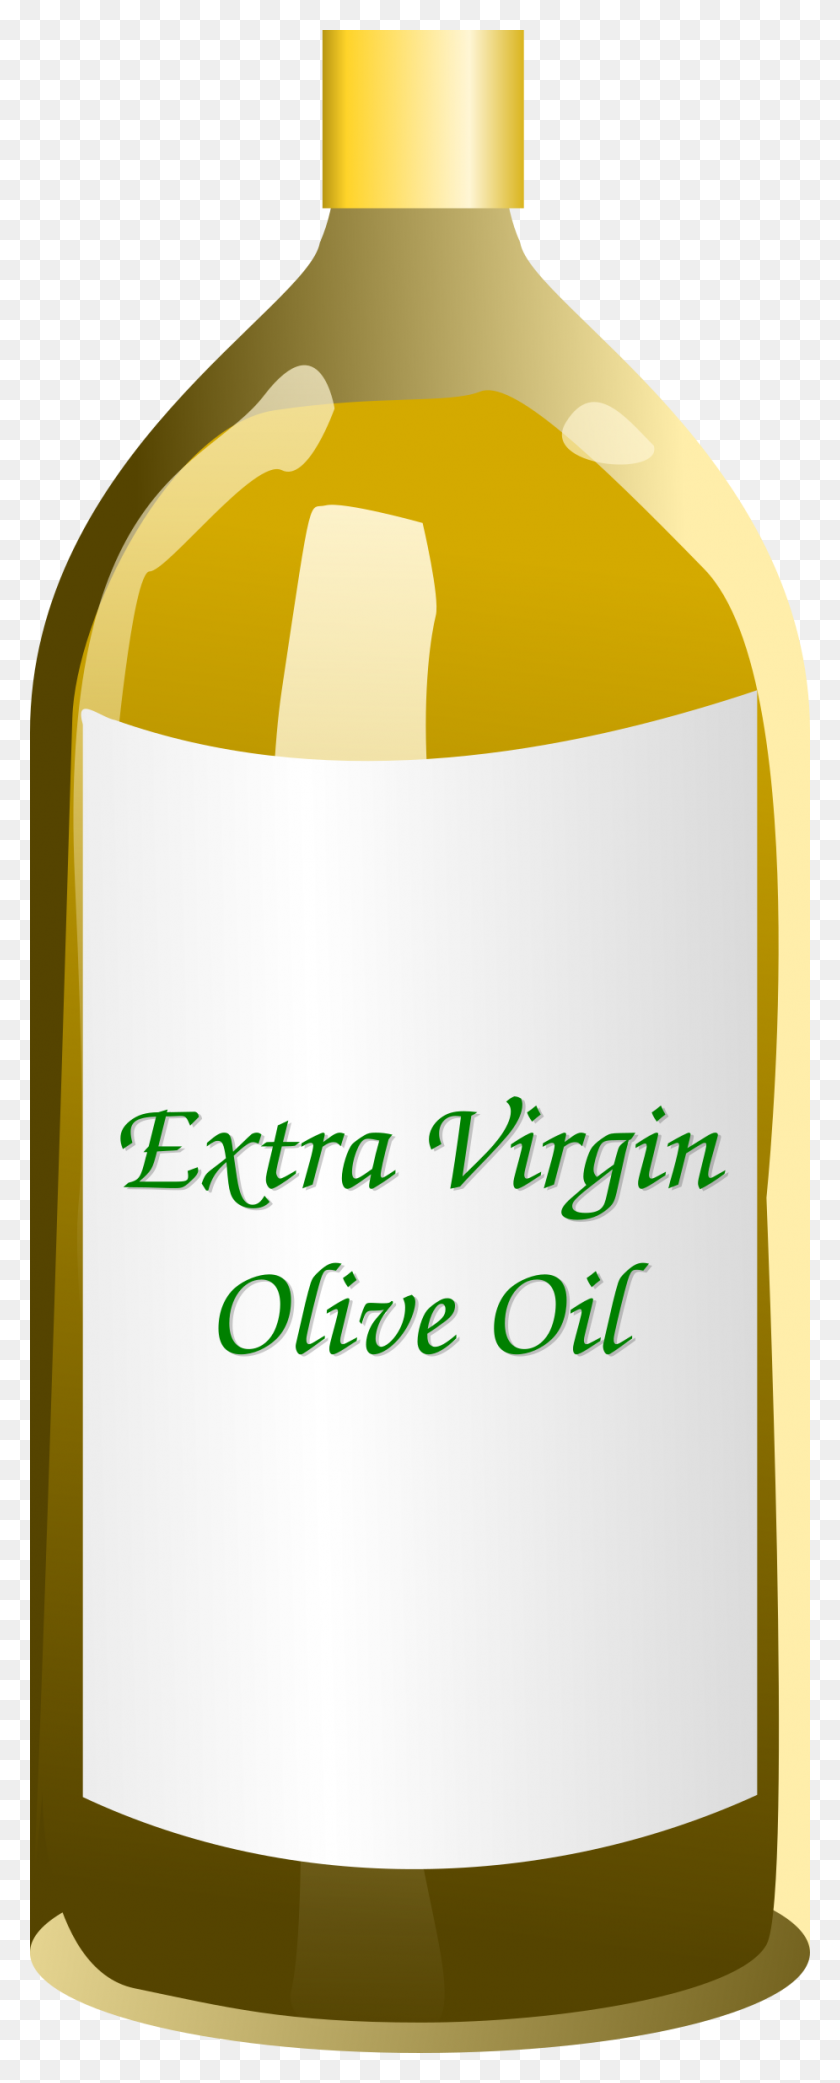 925x2400 Extra Virgin Olive Oil Bottle Icons Png - Olive Oil PNG